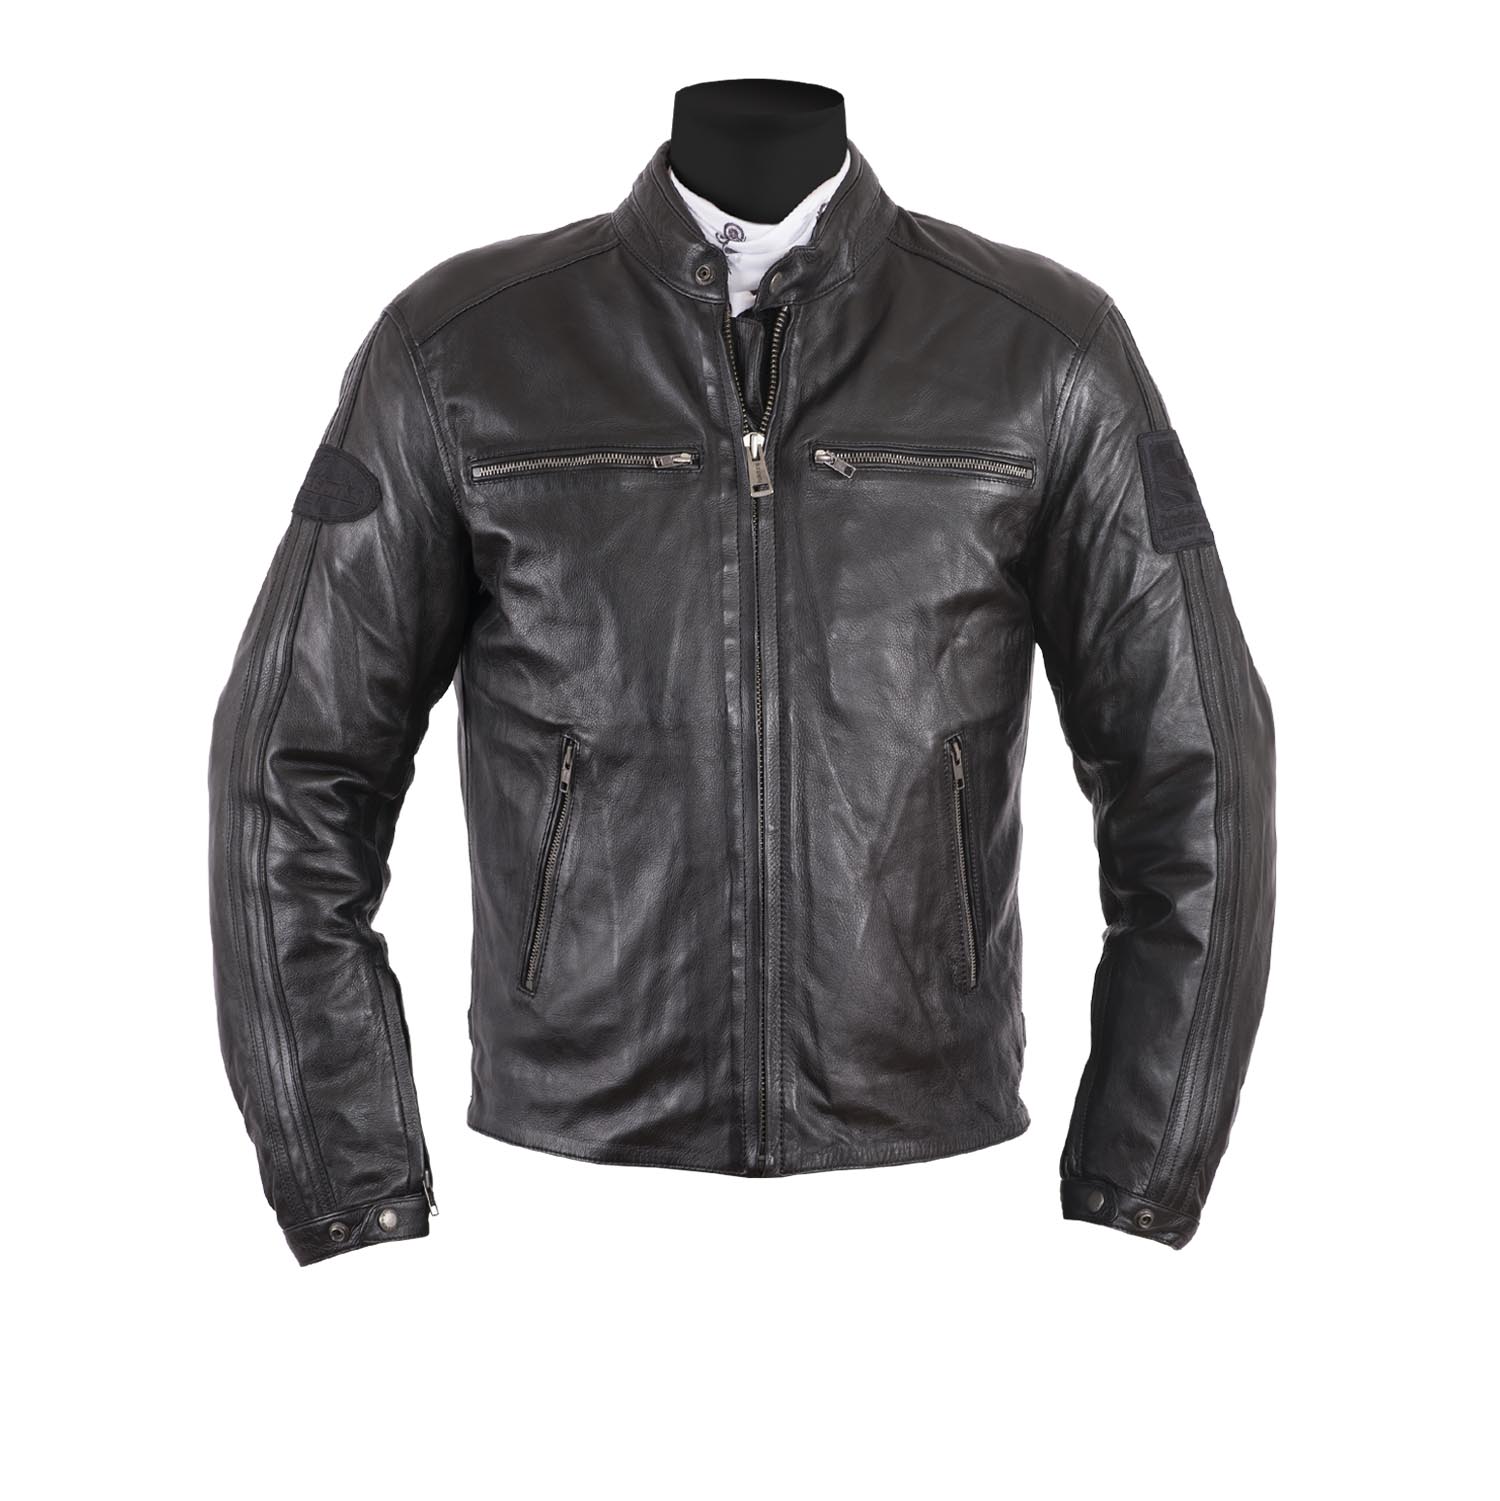 Image of Helstons ACE Rag Jacket Black Size L ID 3662136046252